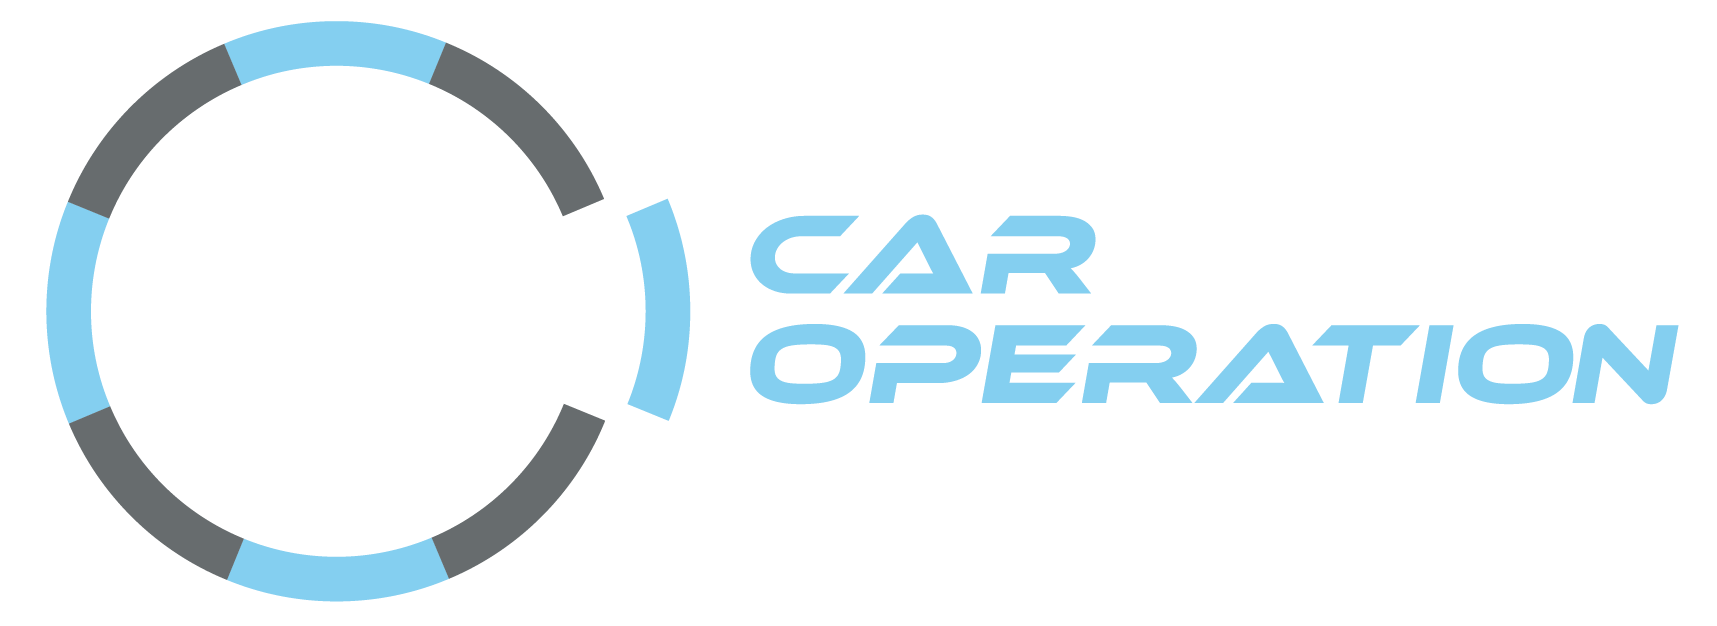 car_operation_logo